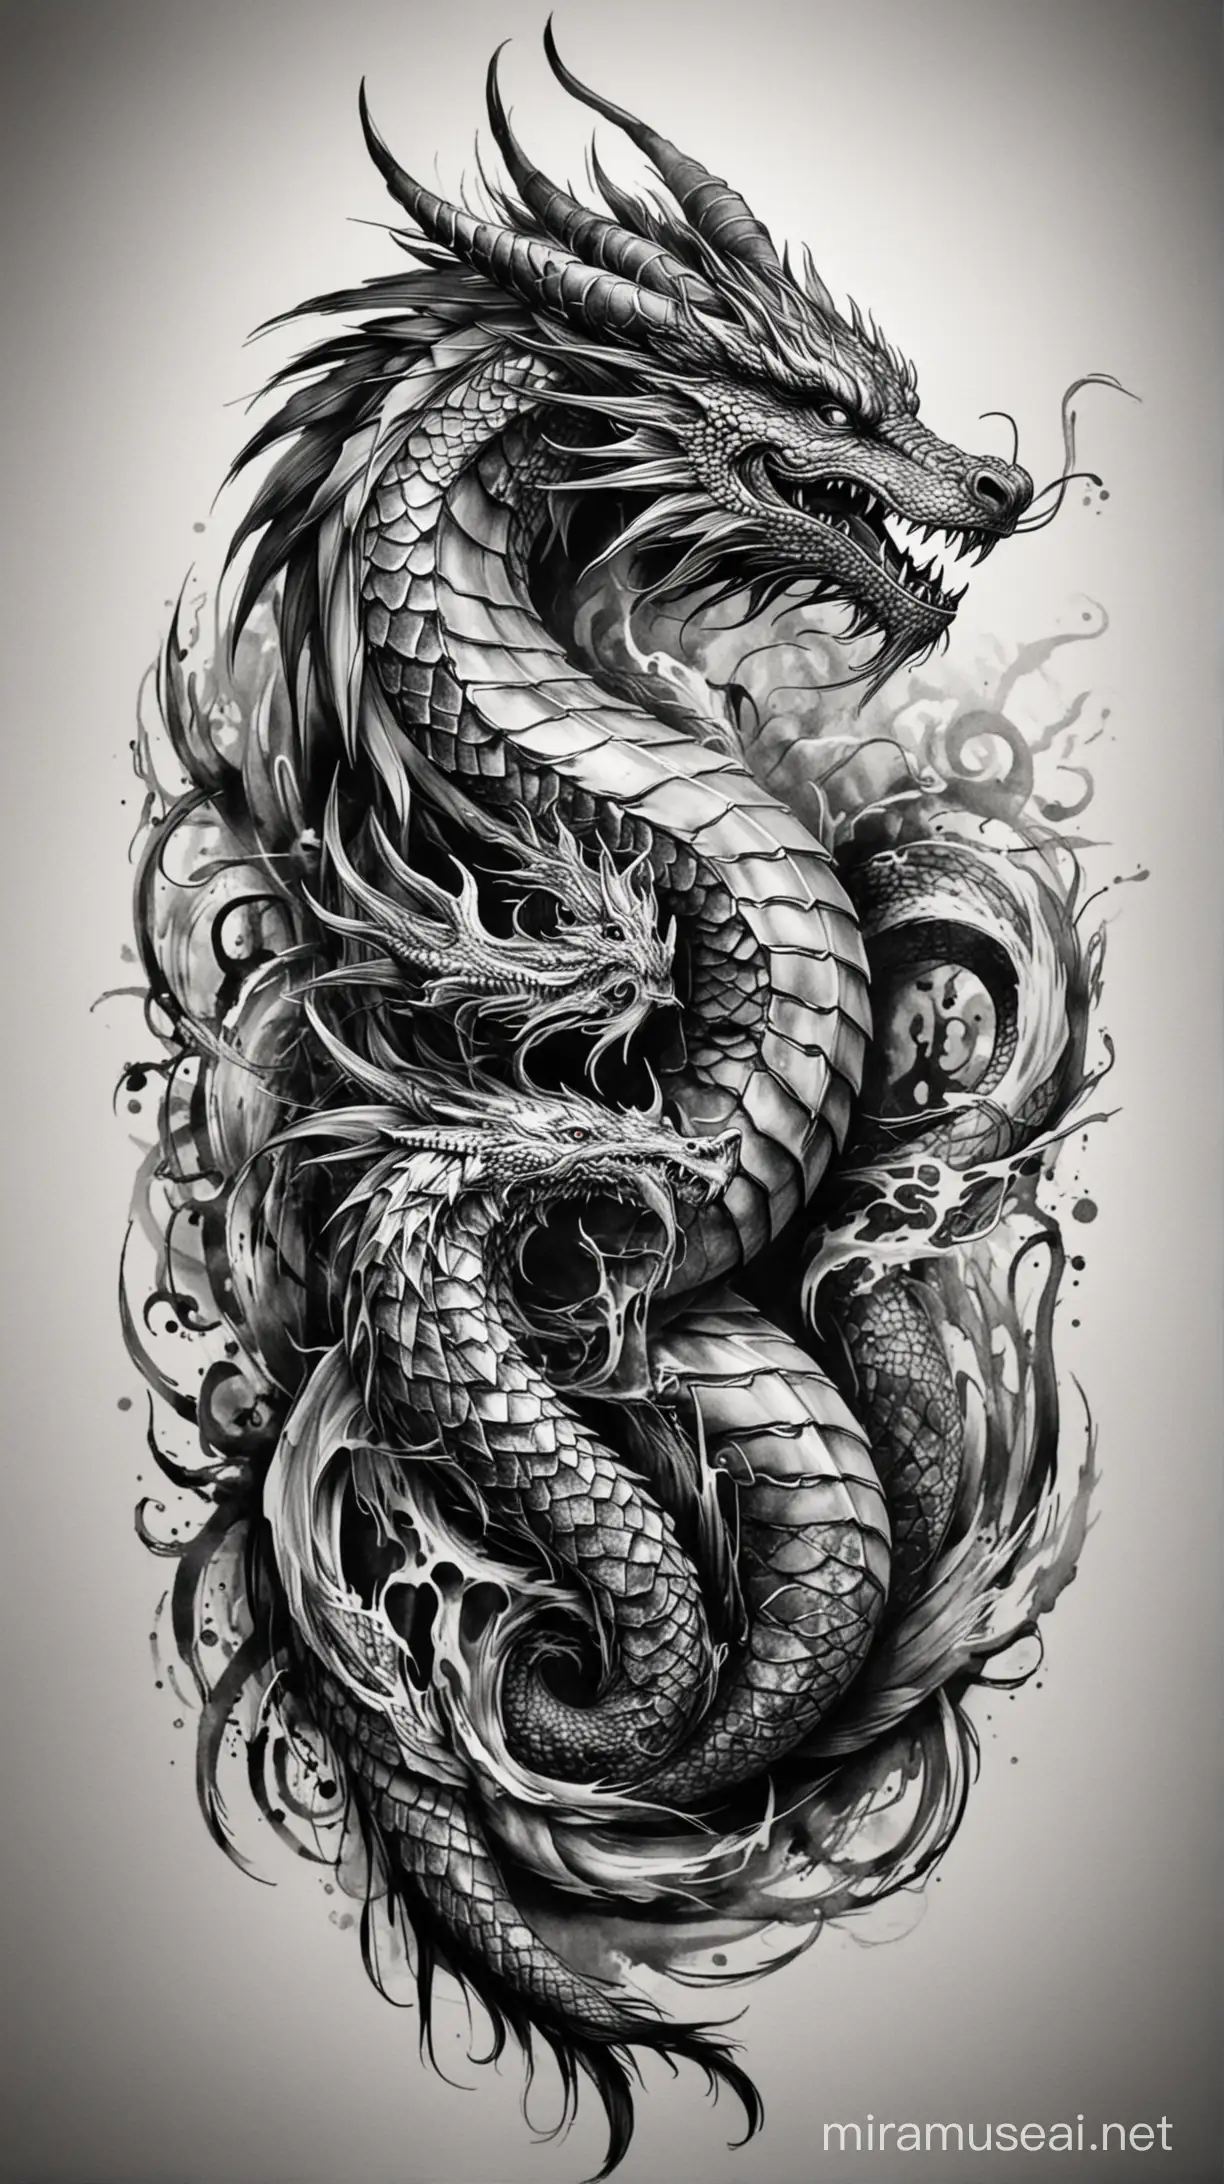 Mystical Dragon Tattoo in Monochrome Aesthetic